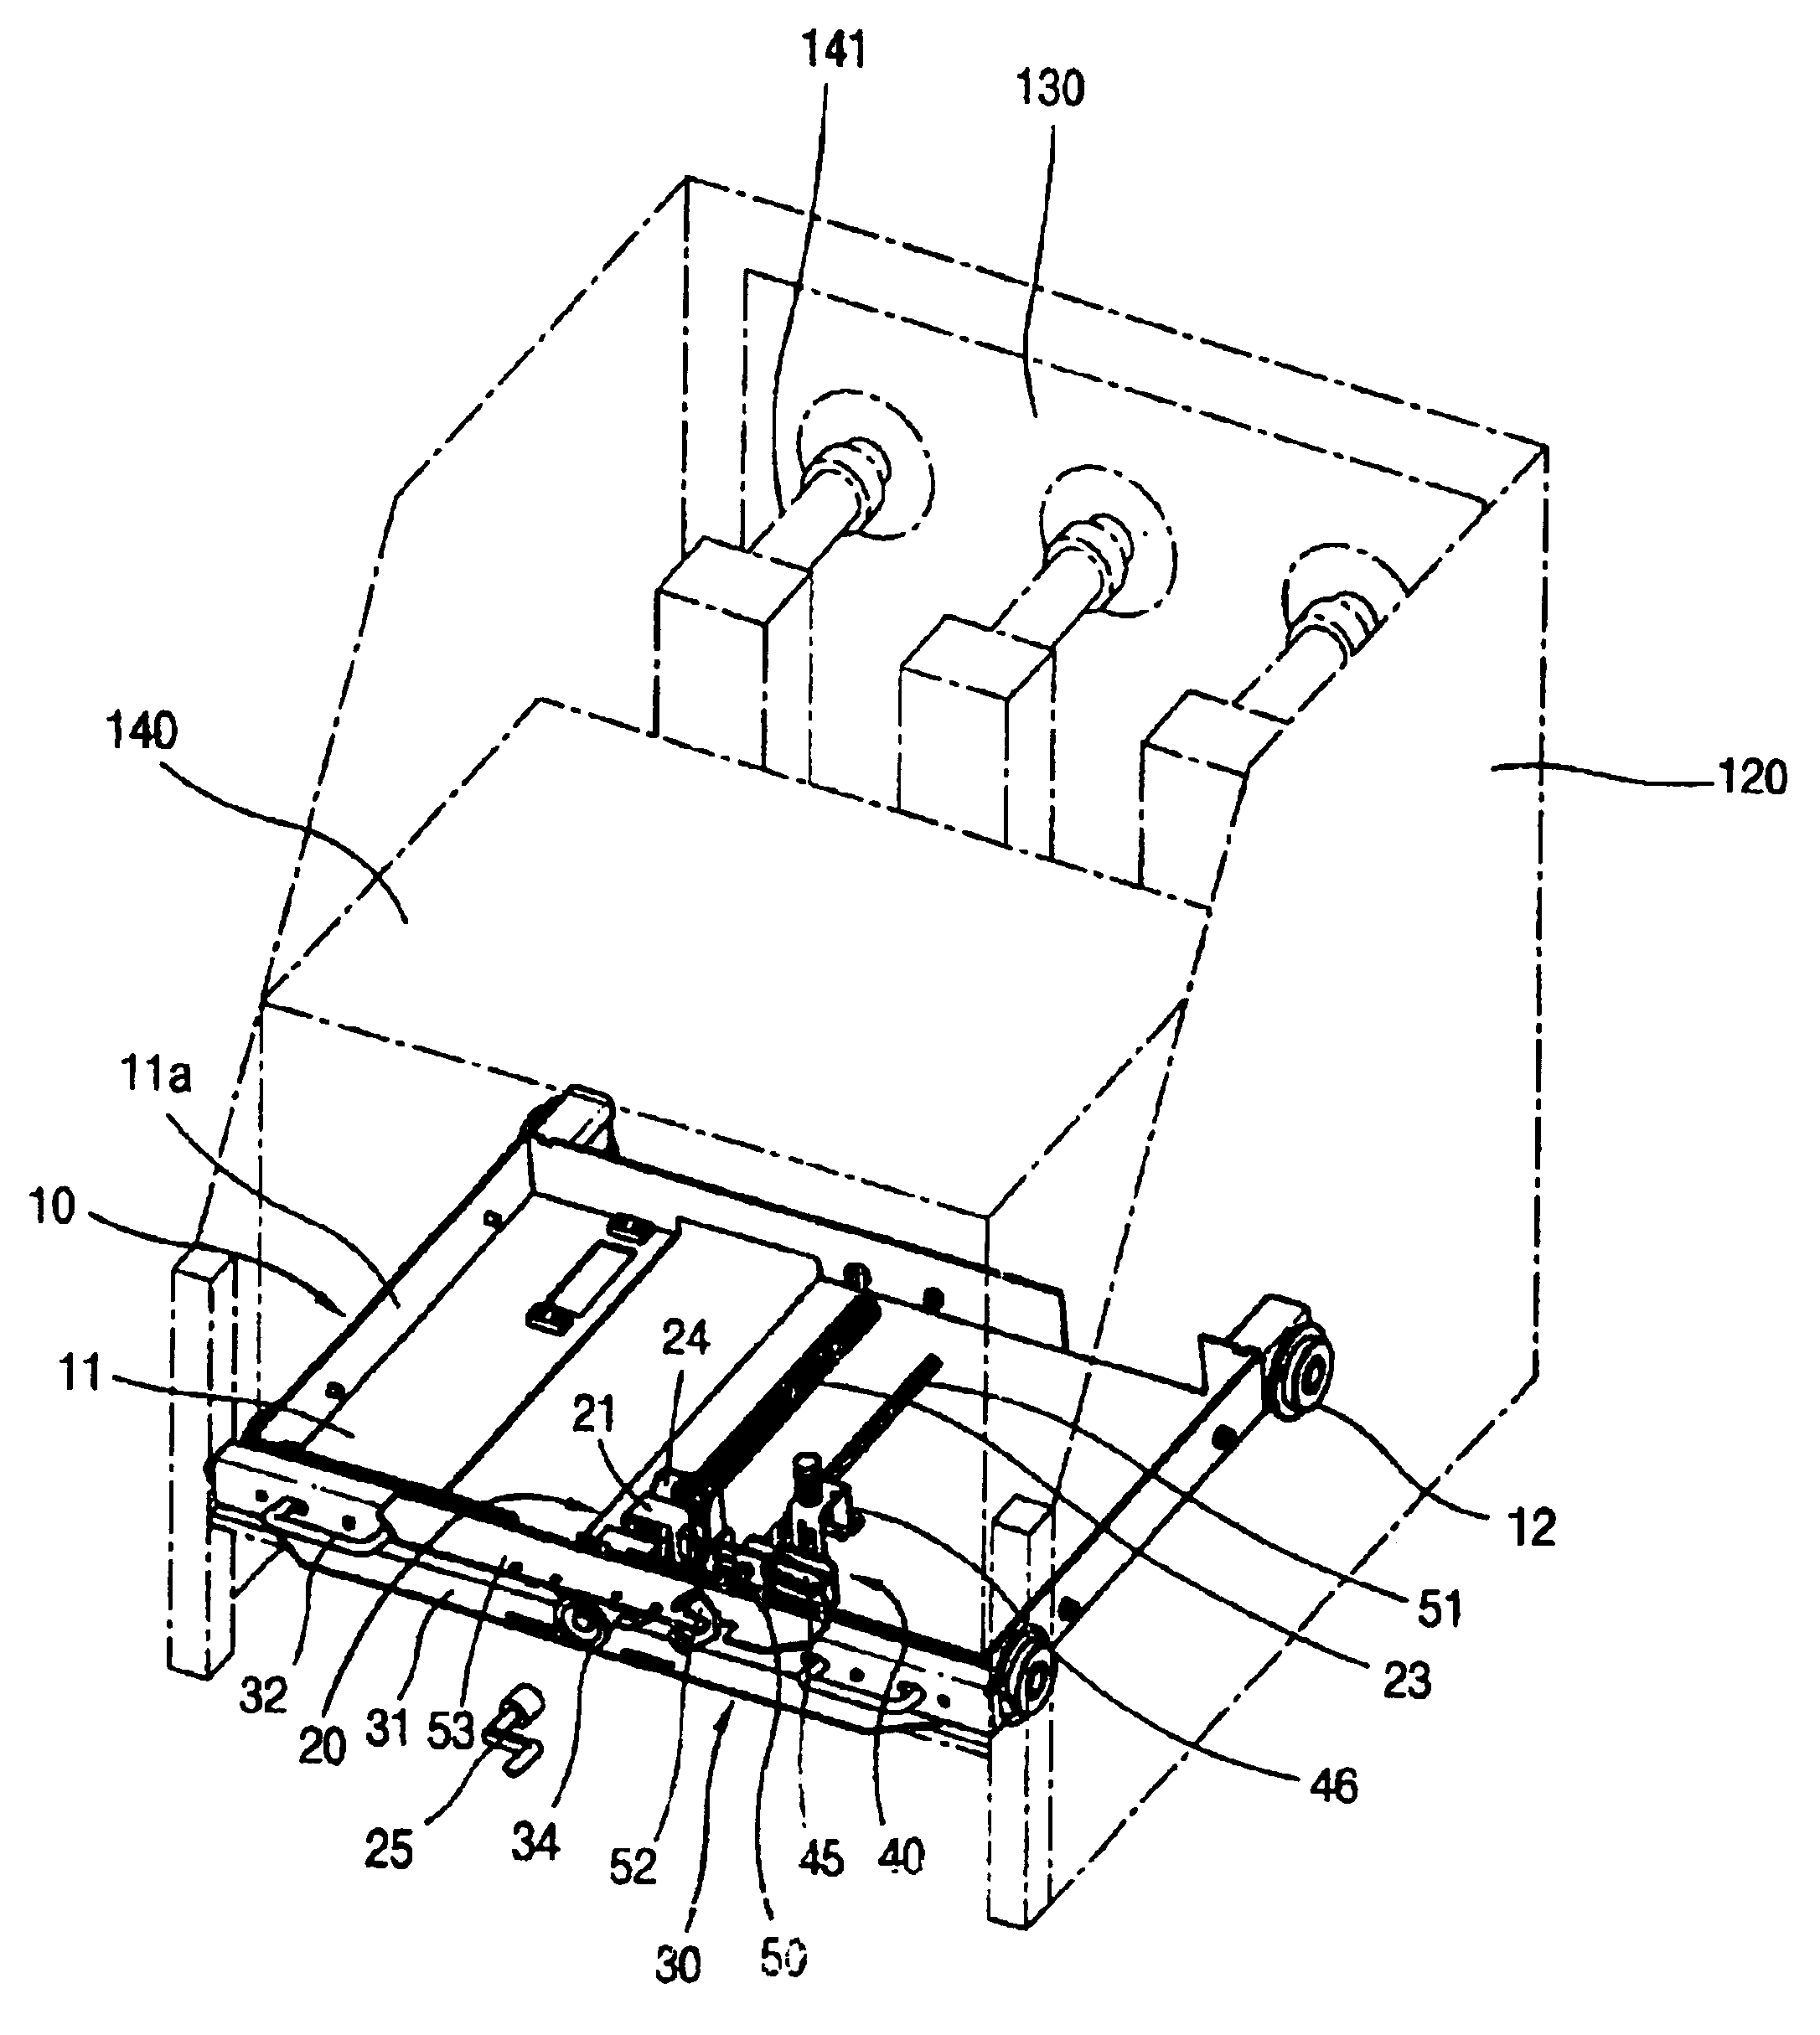 Main switch conveying apparatus for vacuum circuit breaker